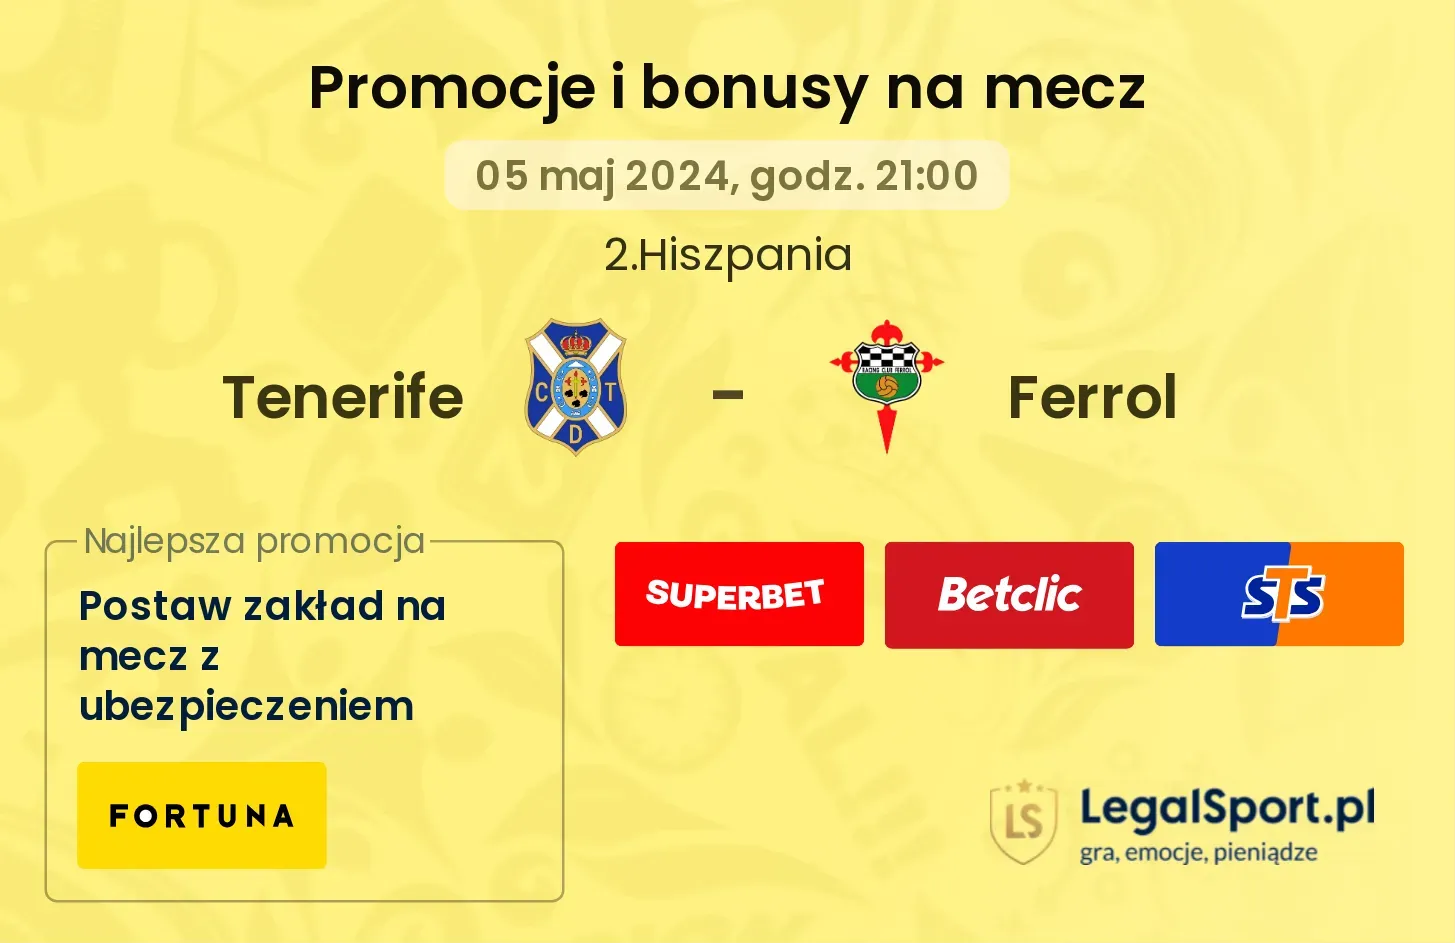 Tenerife - Ferrol promocje bonusy na mecz